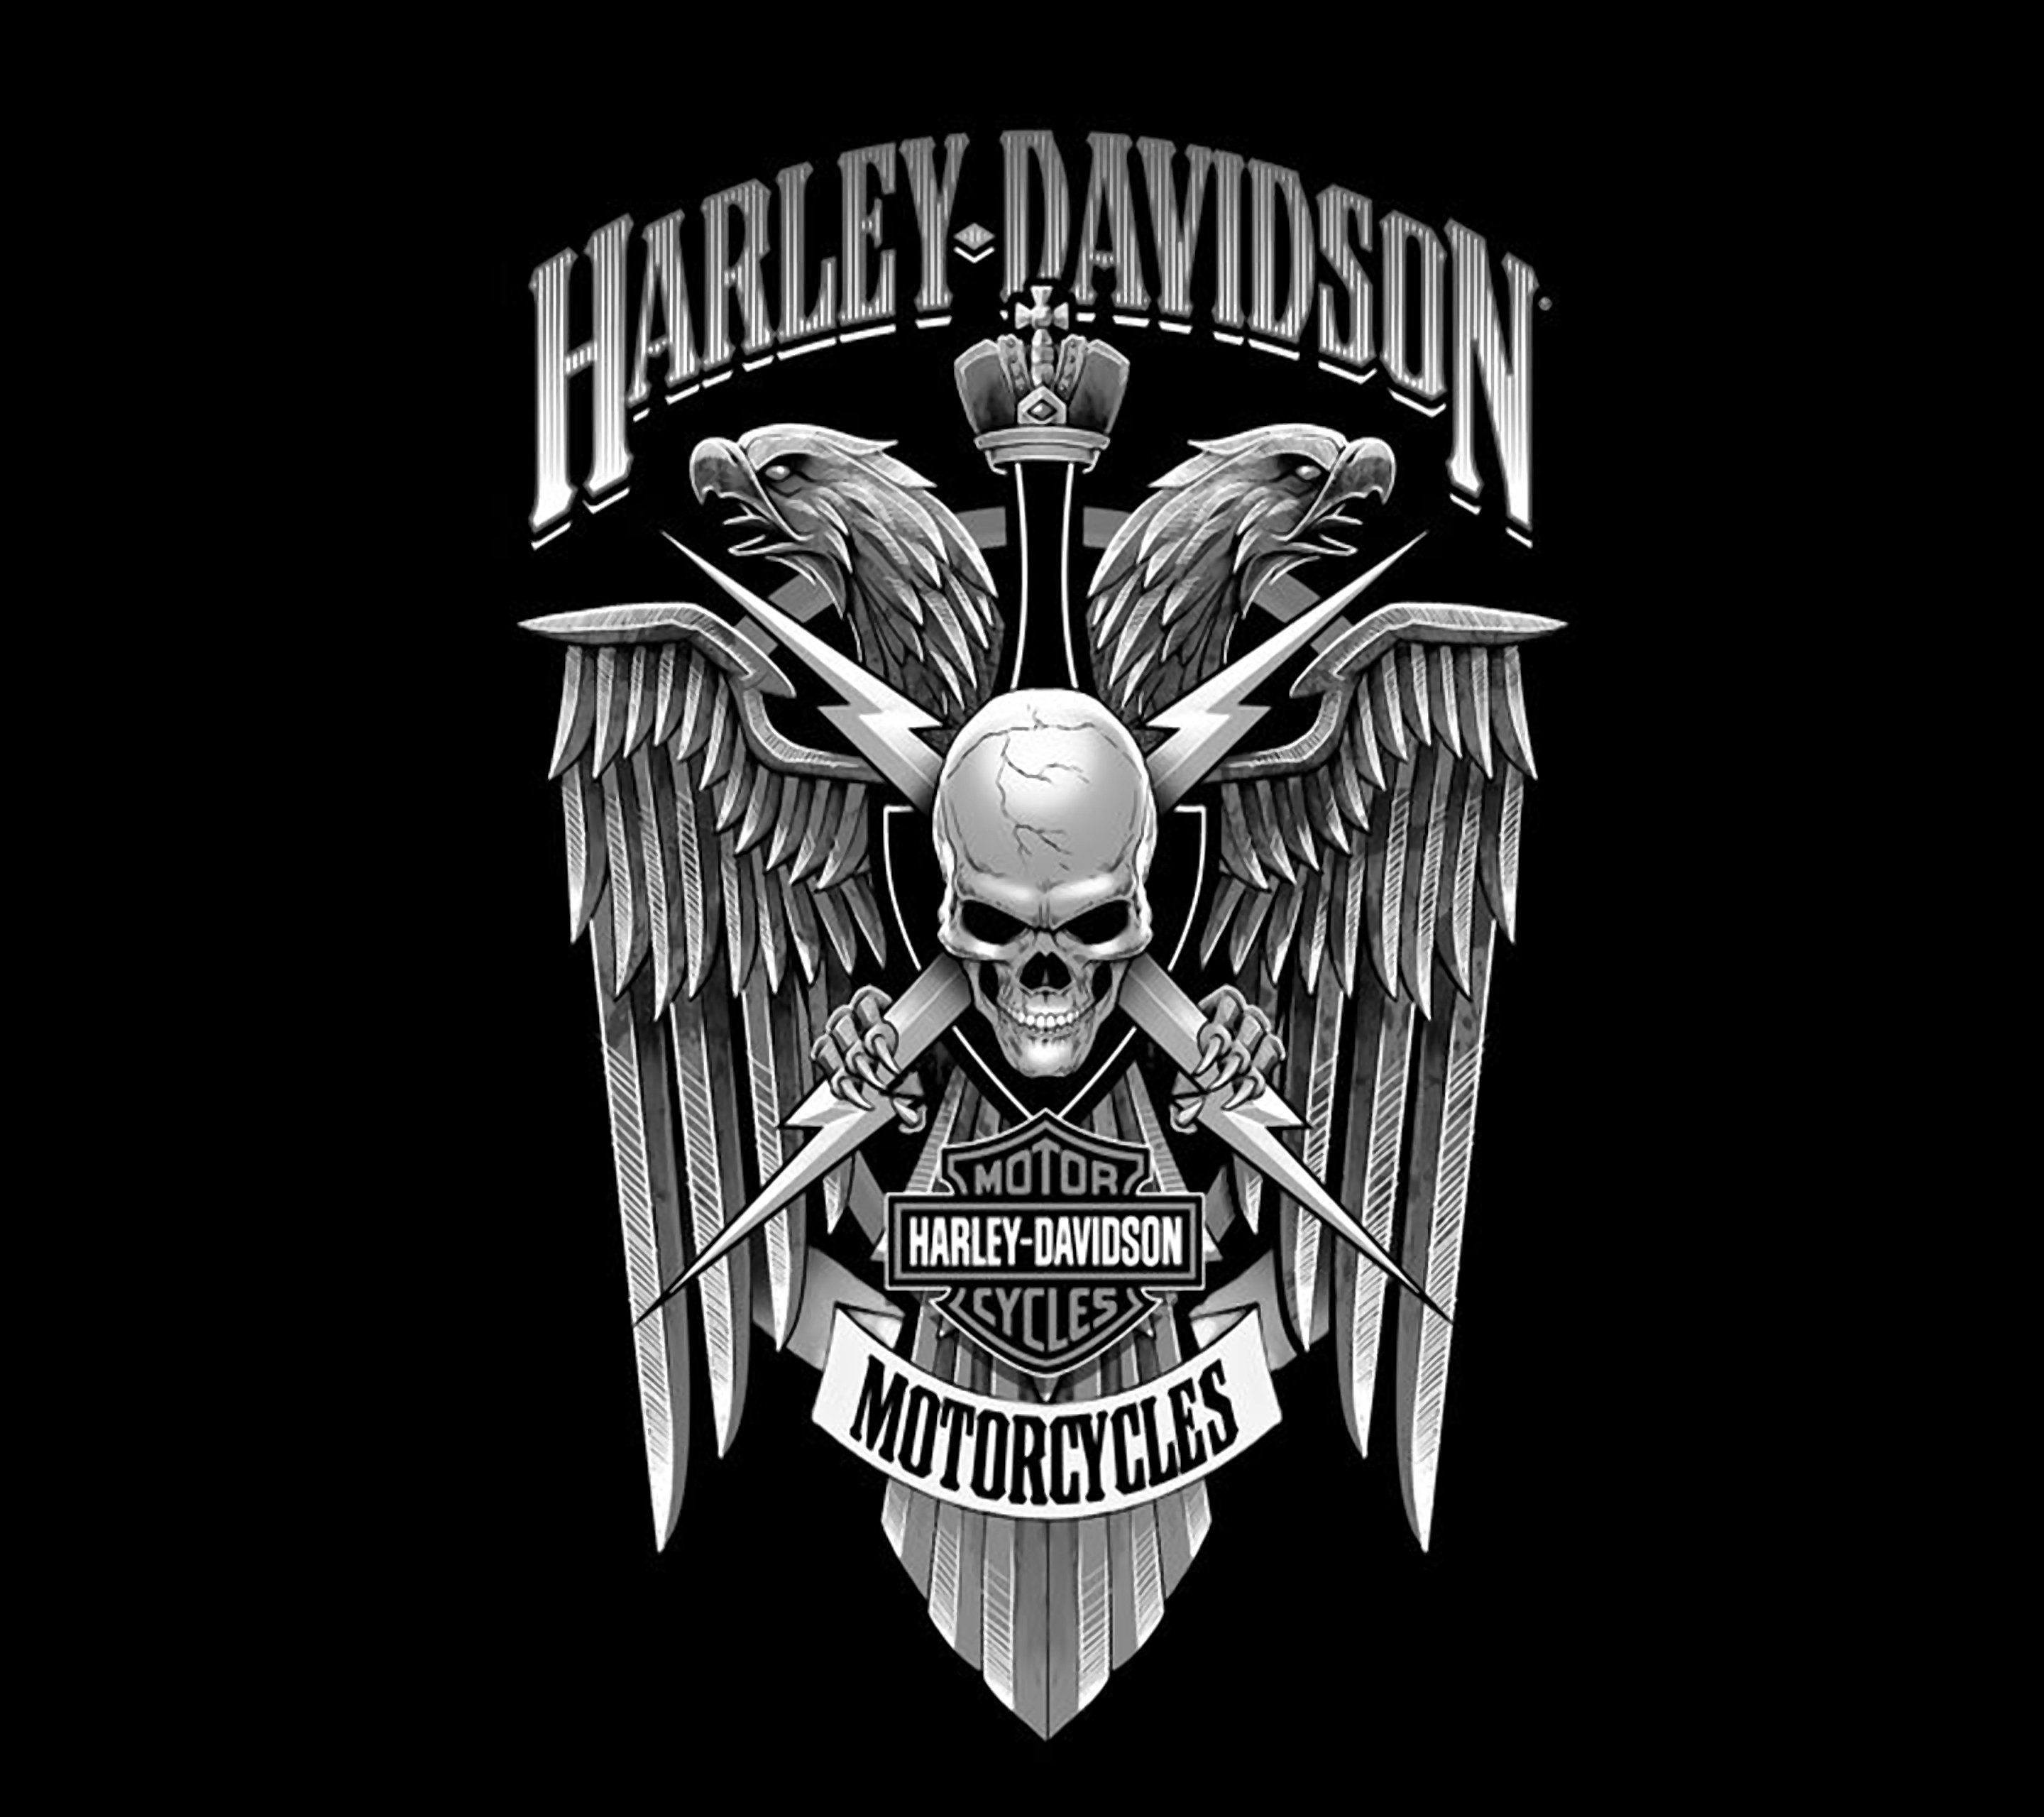 Harley Davidson wallpaper 10532061 wallpaper 2880x2560 624864